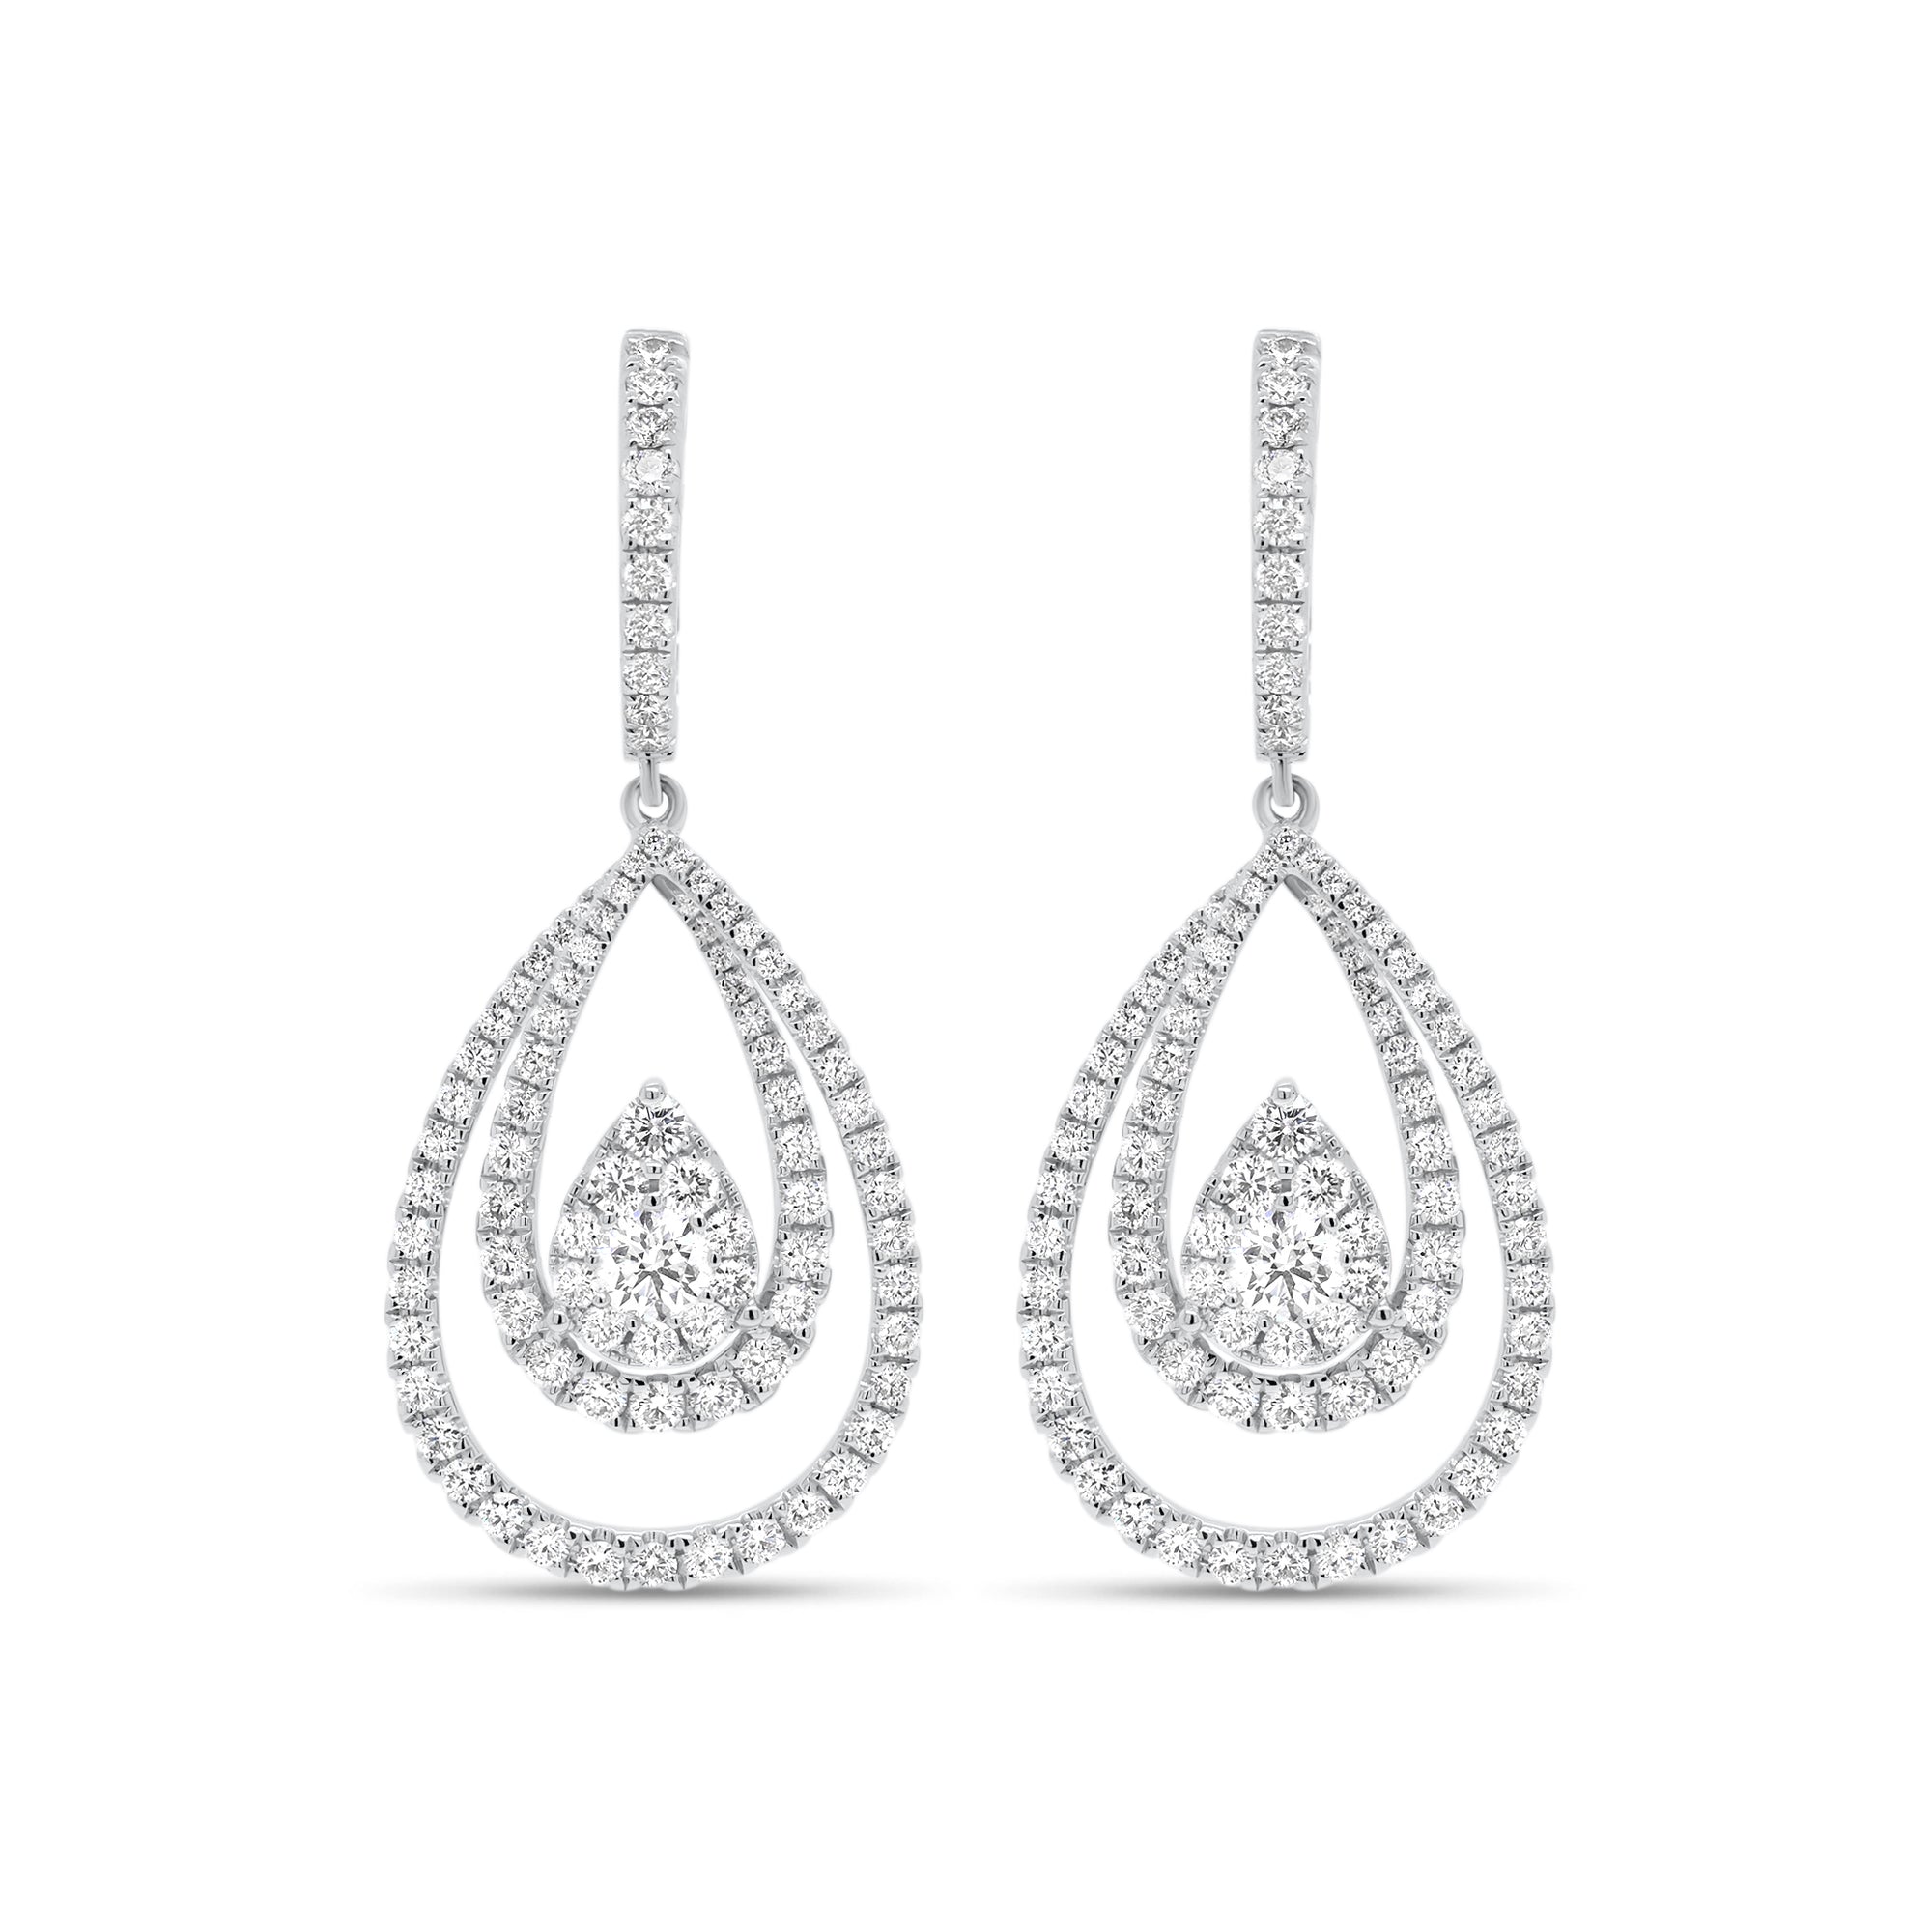 Diamond Layered Teardrop Dangle Earrings  - 18K gold weighing 7.40 grams  - 180 round diamonds totaling 2.20 carats